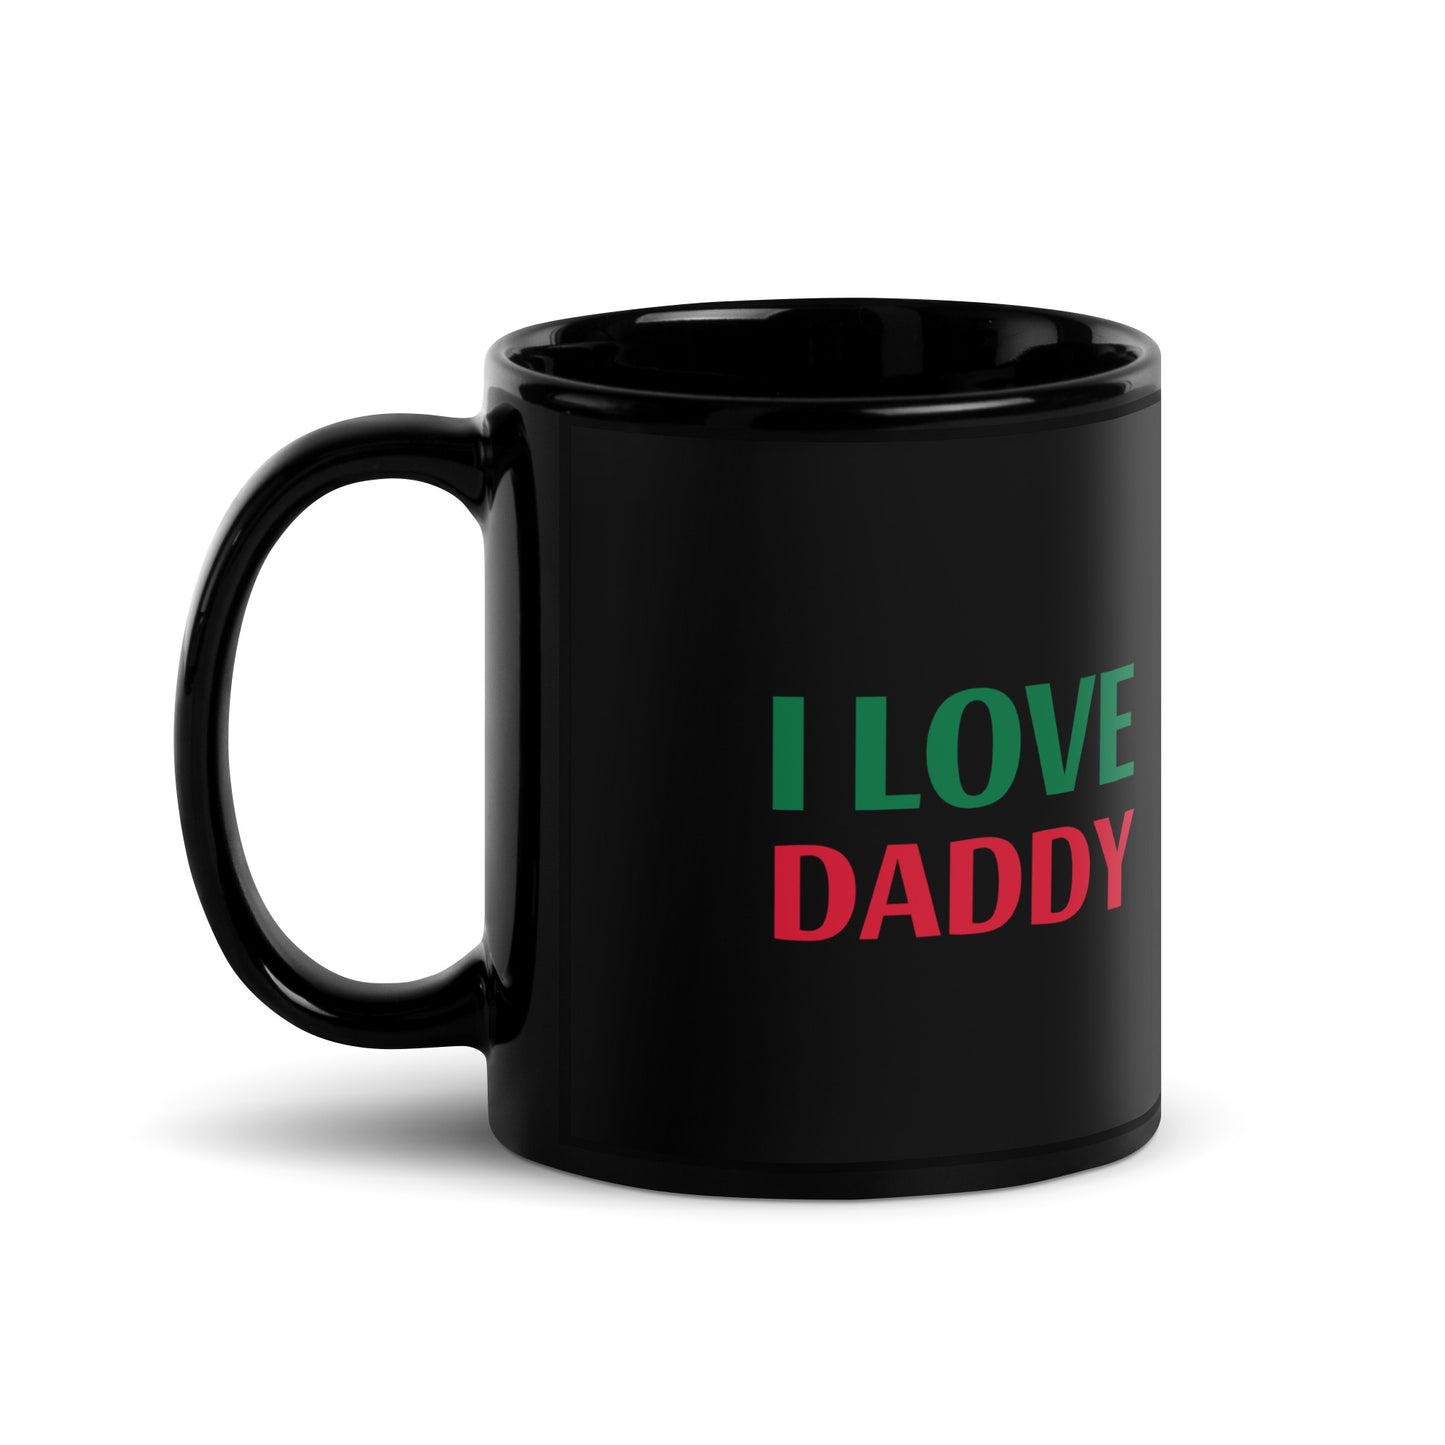 I LOVE DADDY Black Glossy Mug